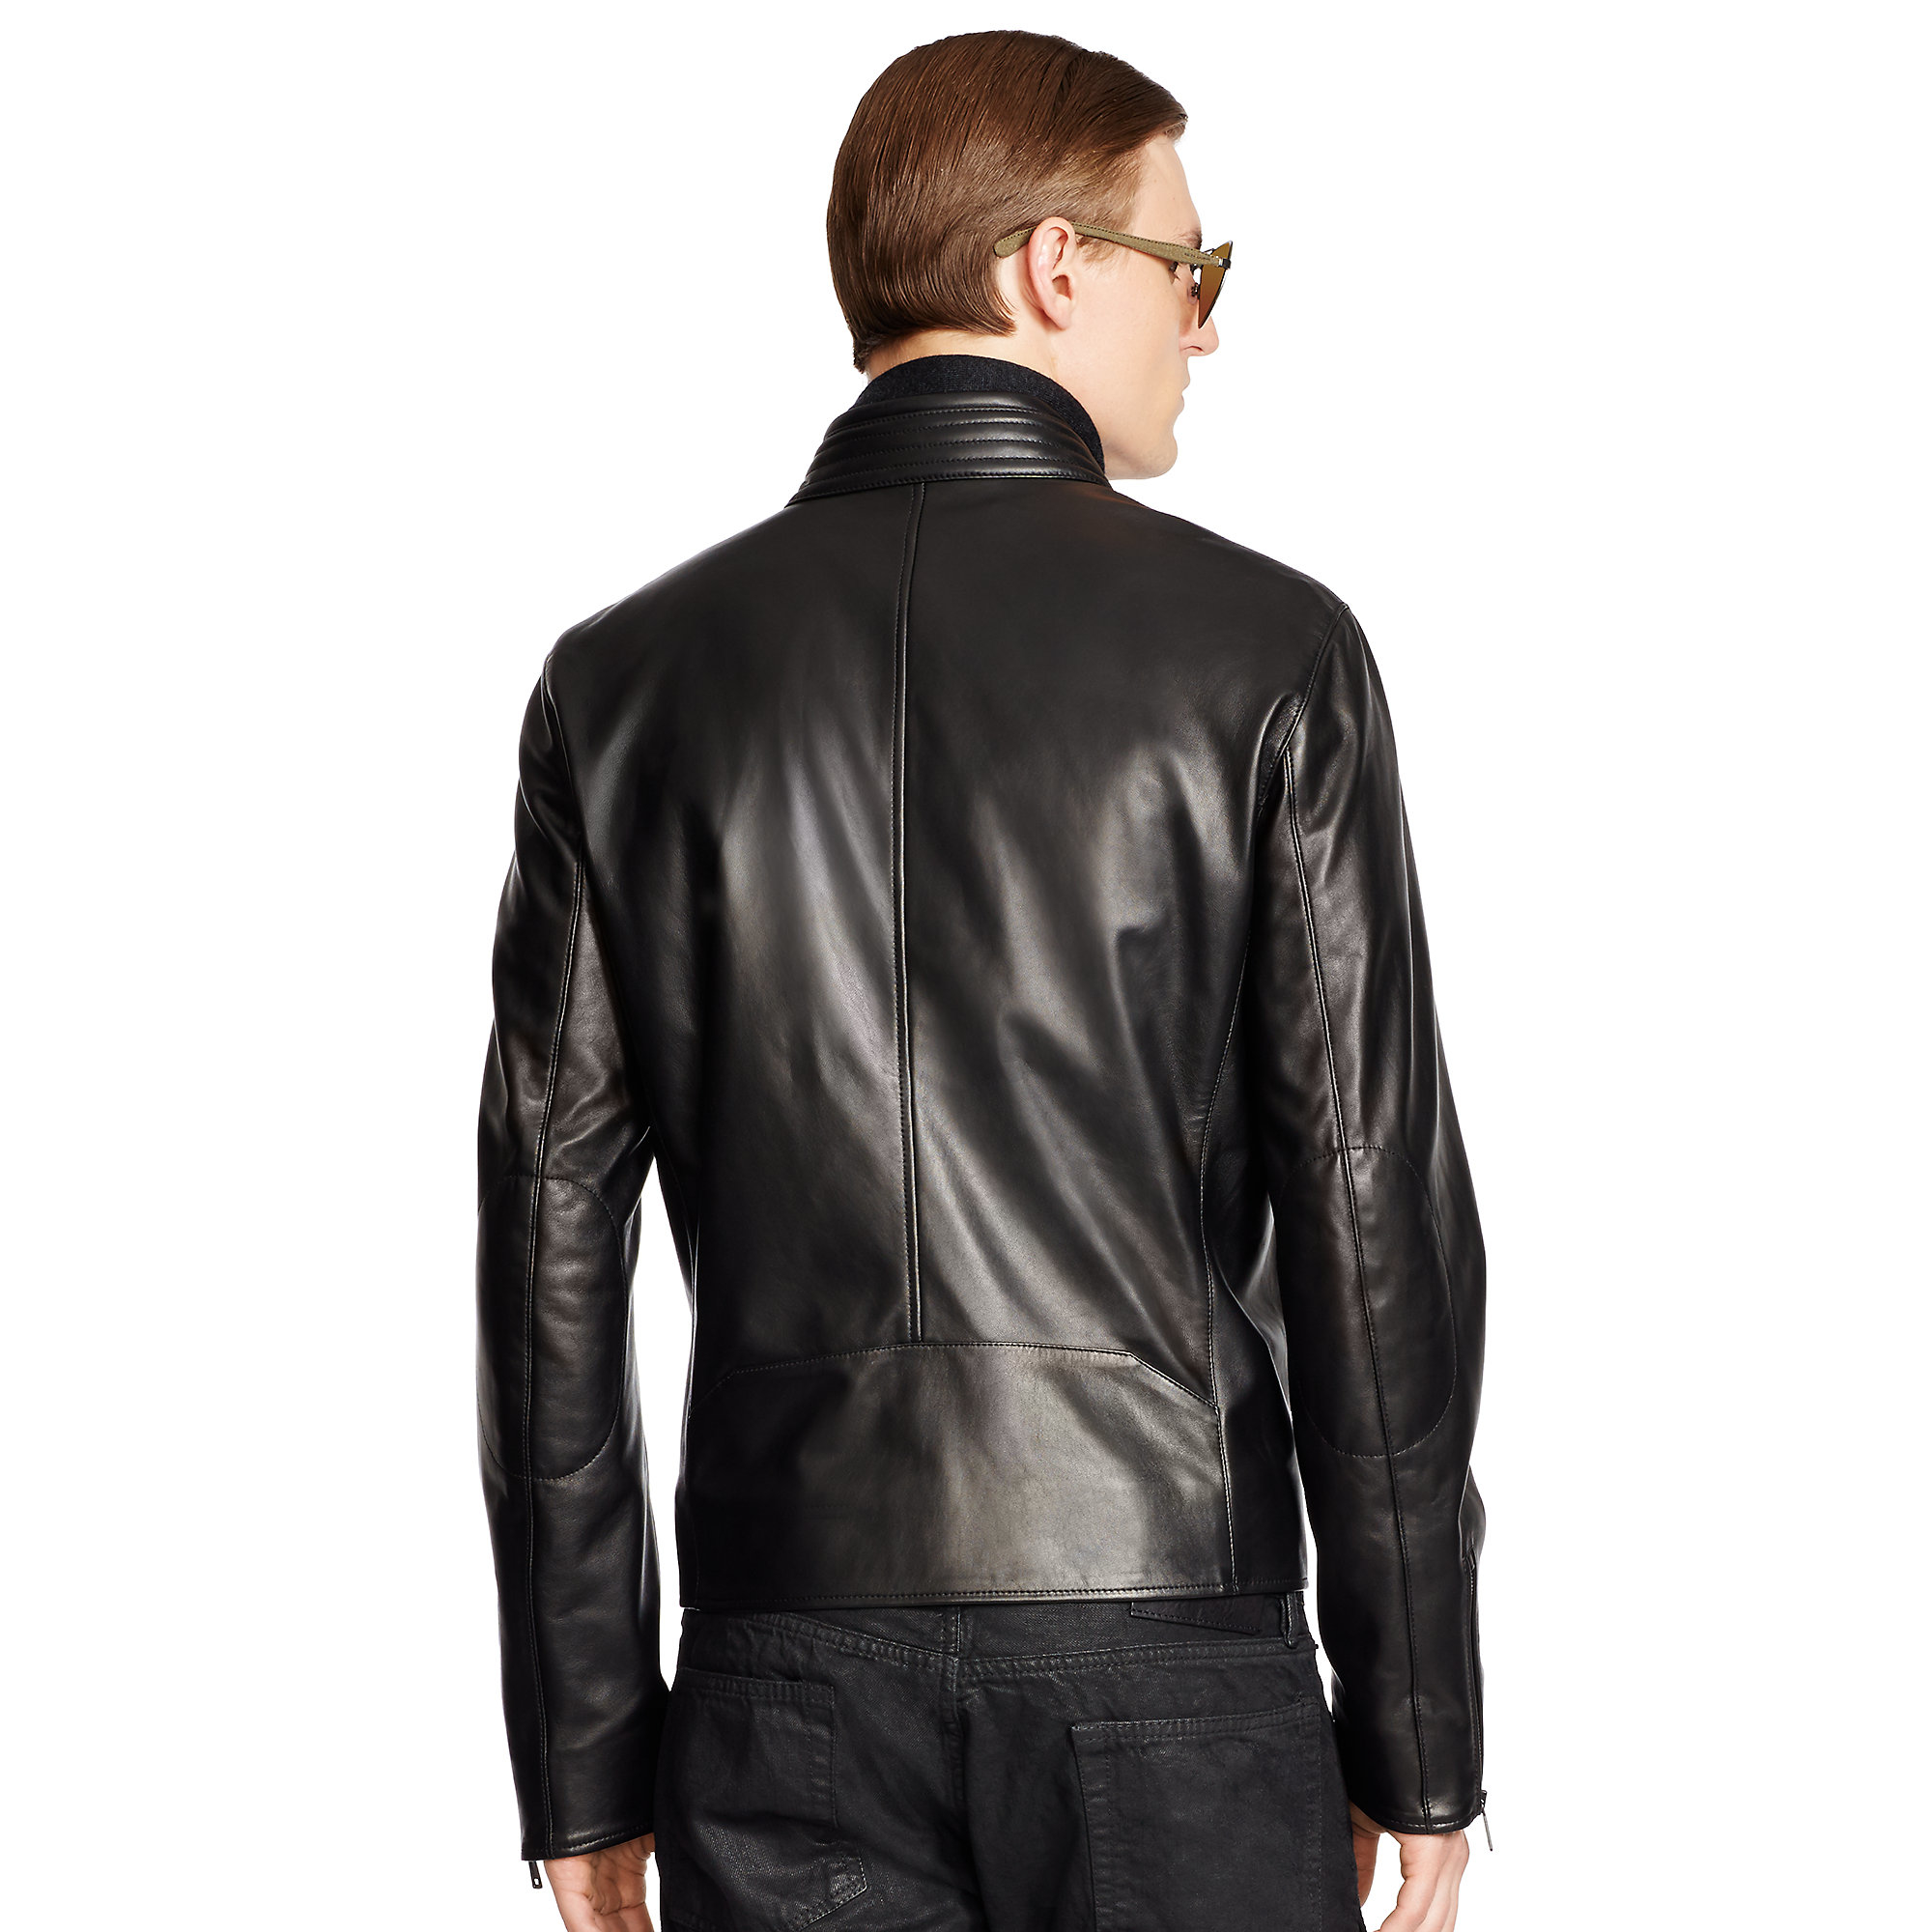 Lyst - Ralph Lauren Black Label New Altitude Leather Jacket in Black ...